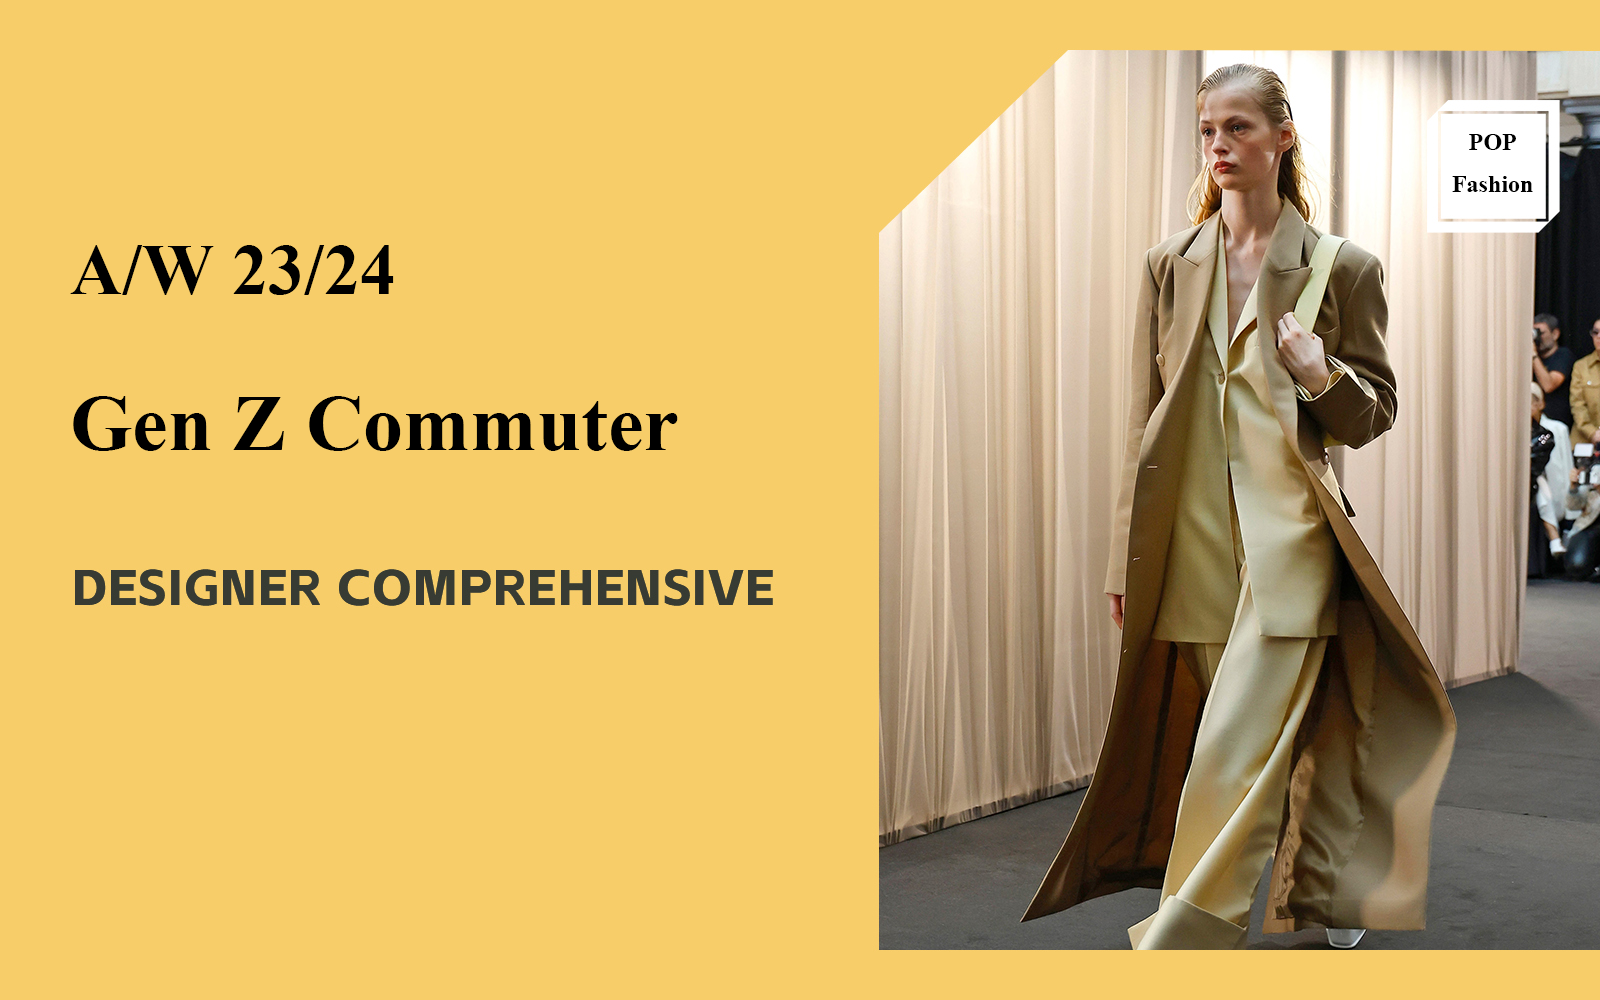 Gen Z Commuter -- The Comprehensive Analysis of Women's Designer Brands